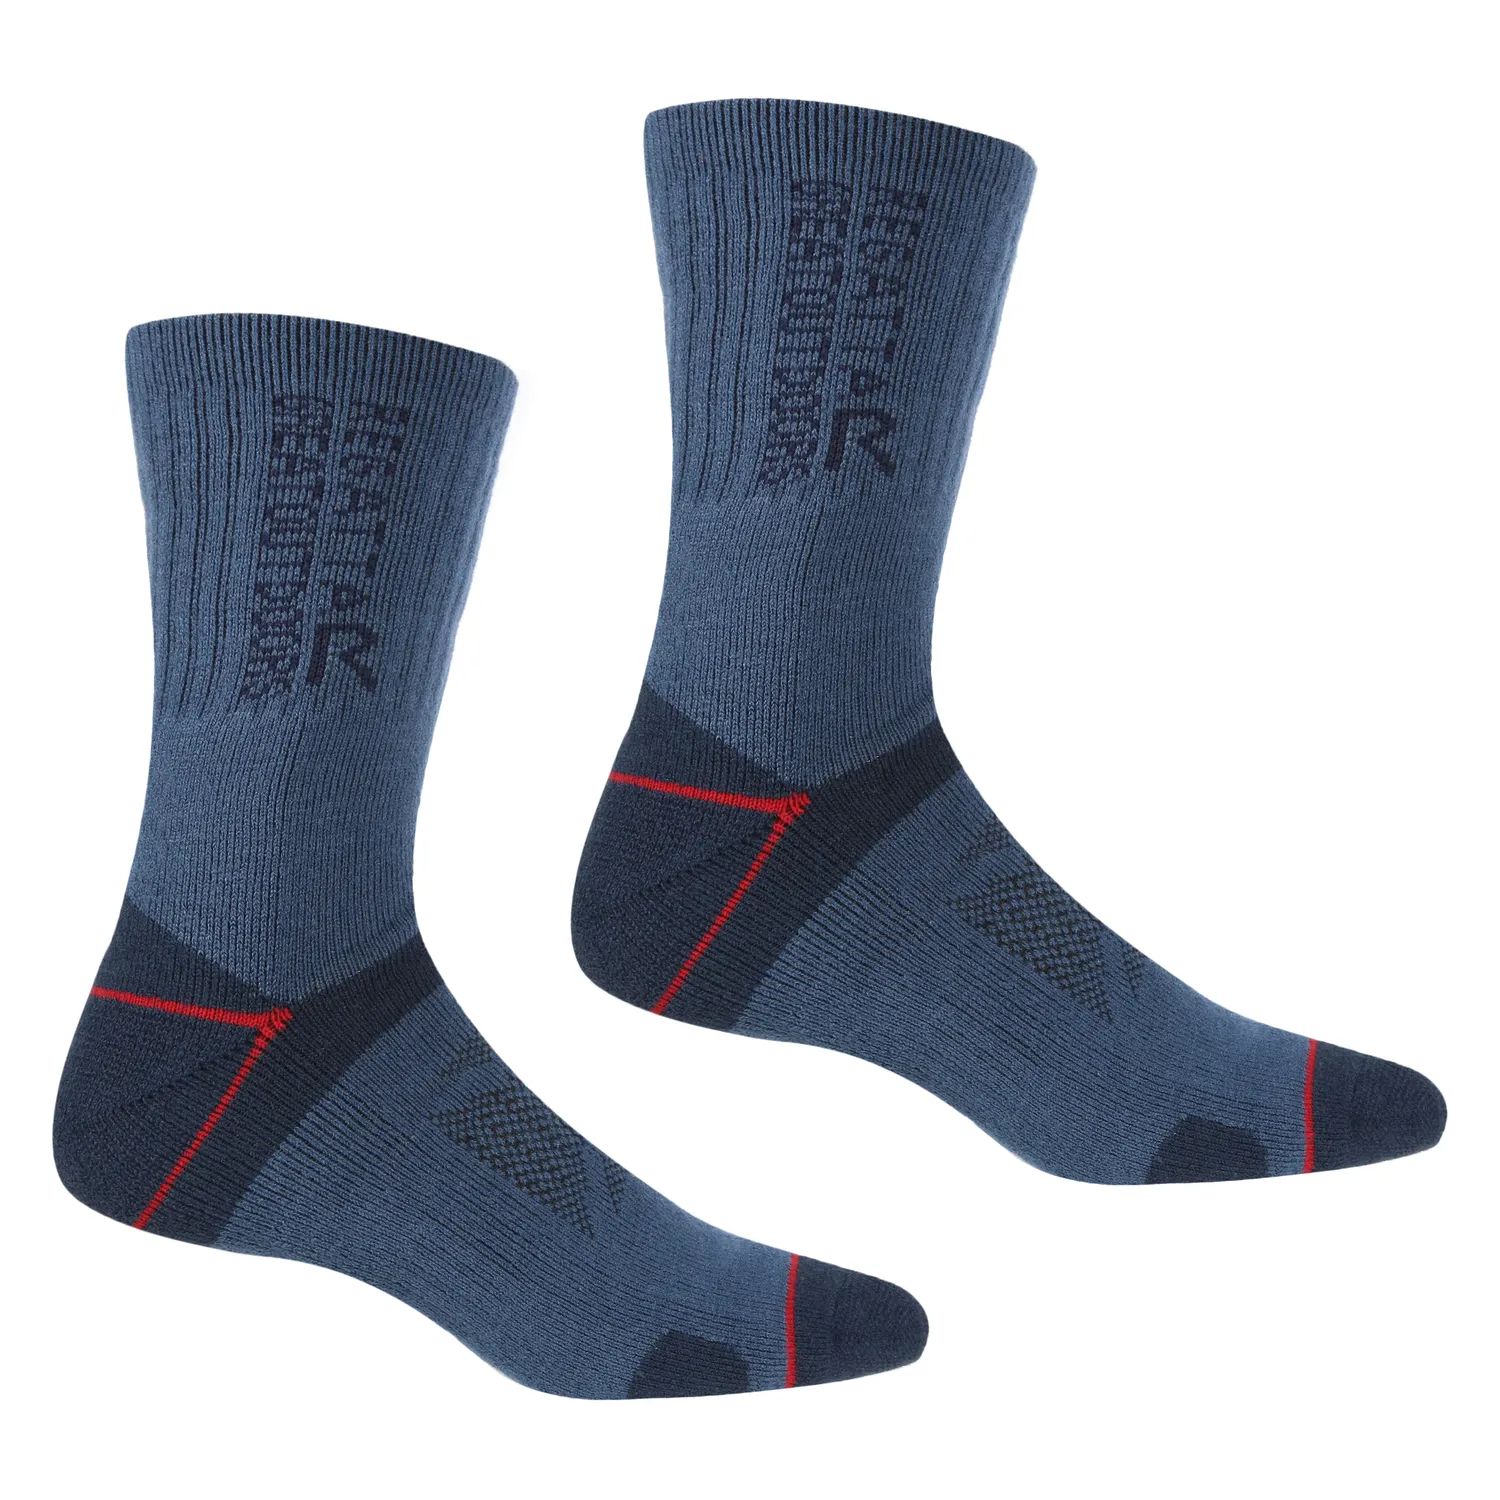 Regatta Blister Protect II Walking Socks Dark Denim/Dark Red